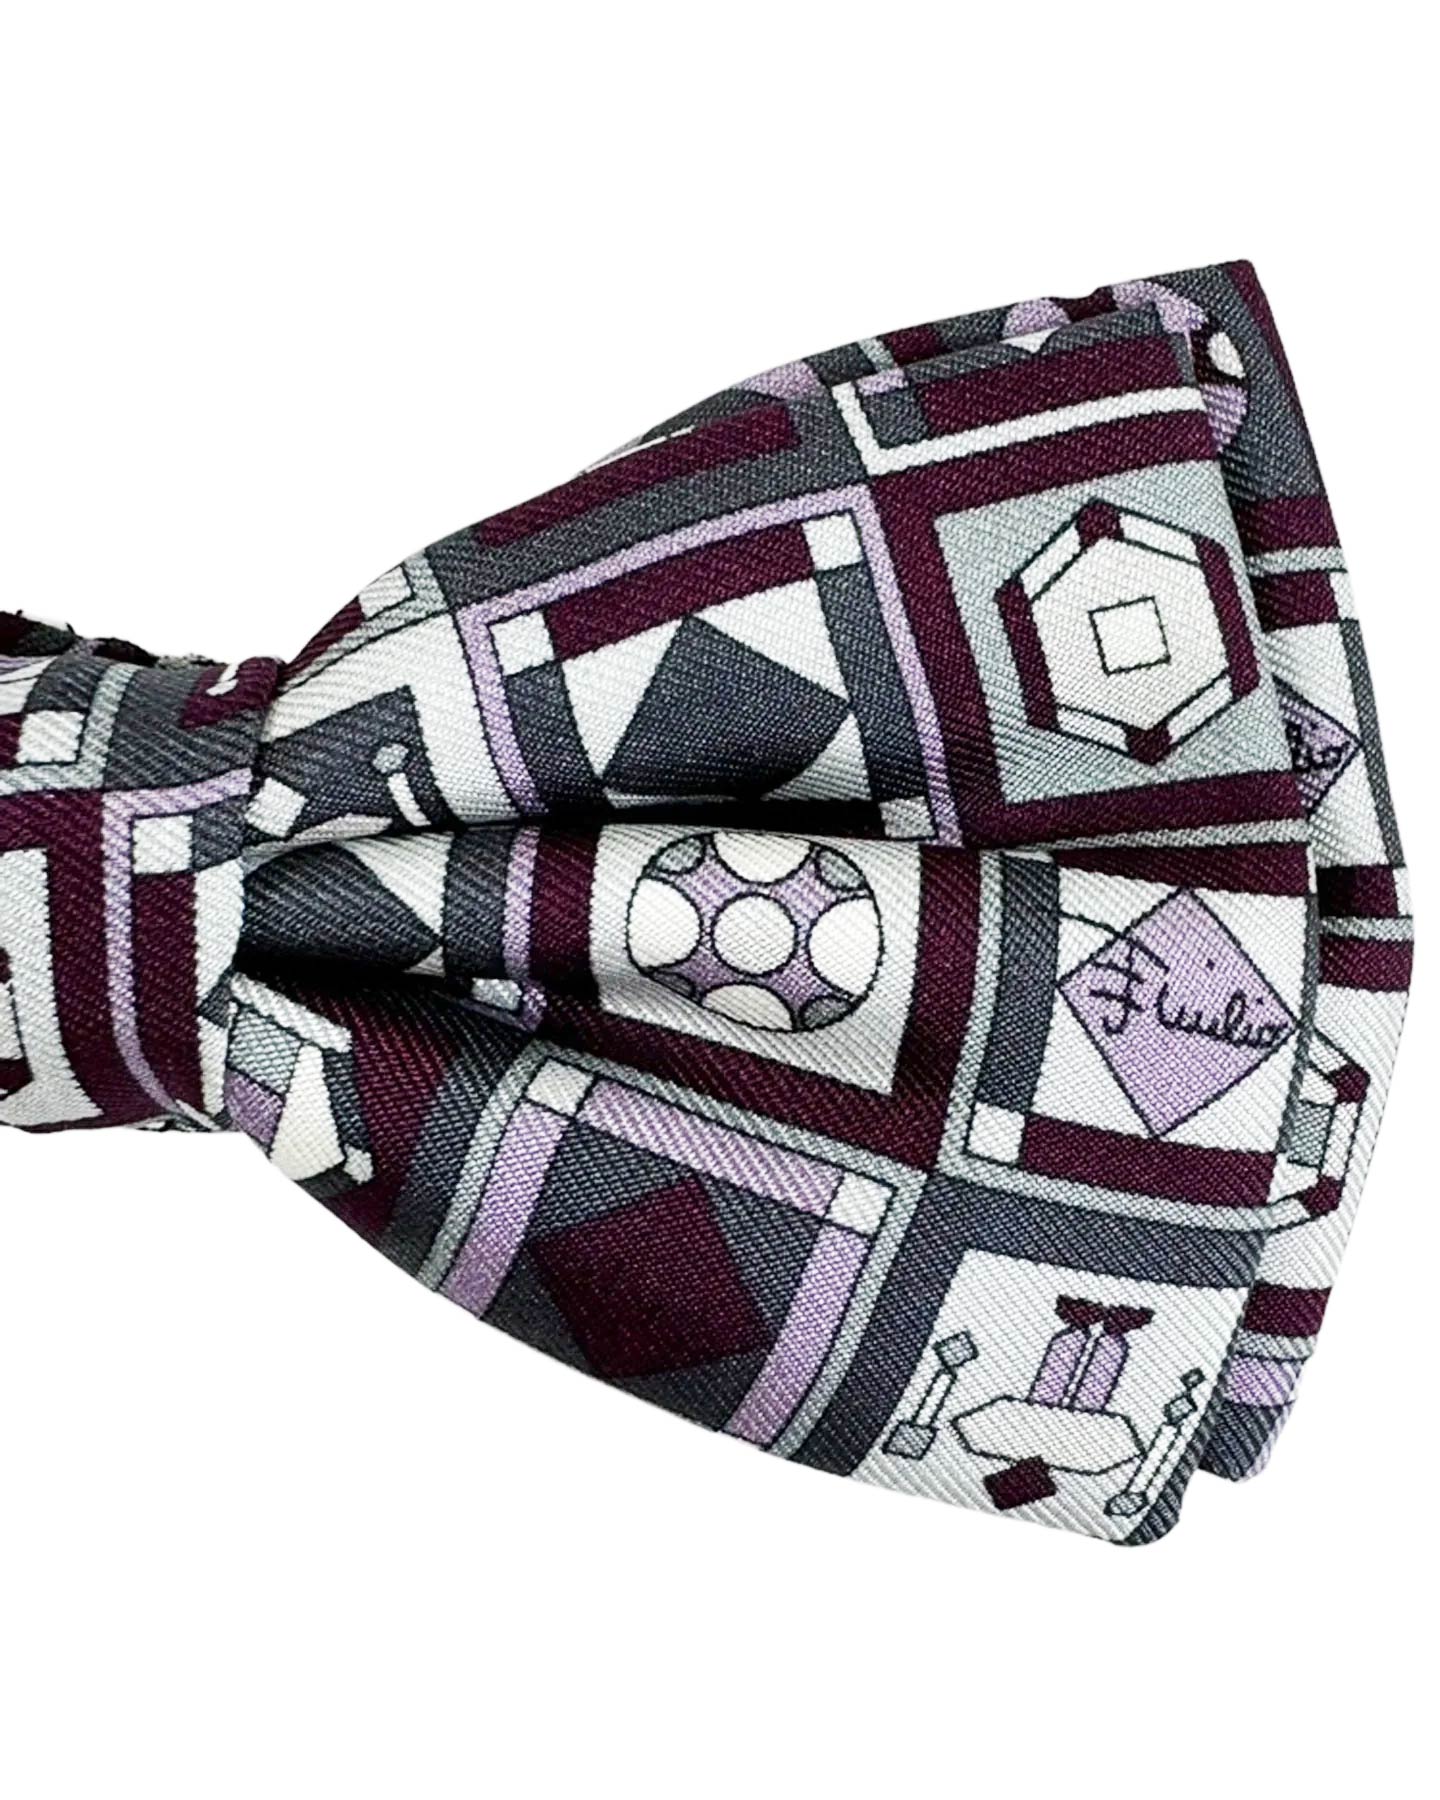 Emilio Pucci Bow Tie Black Purple Geometric Design Pre-Tied Designer Bowtie